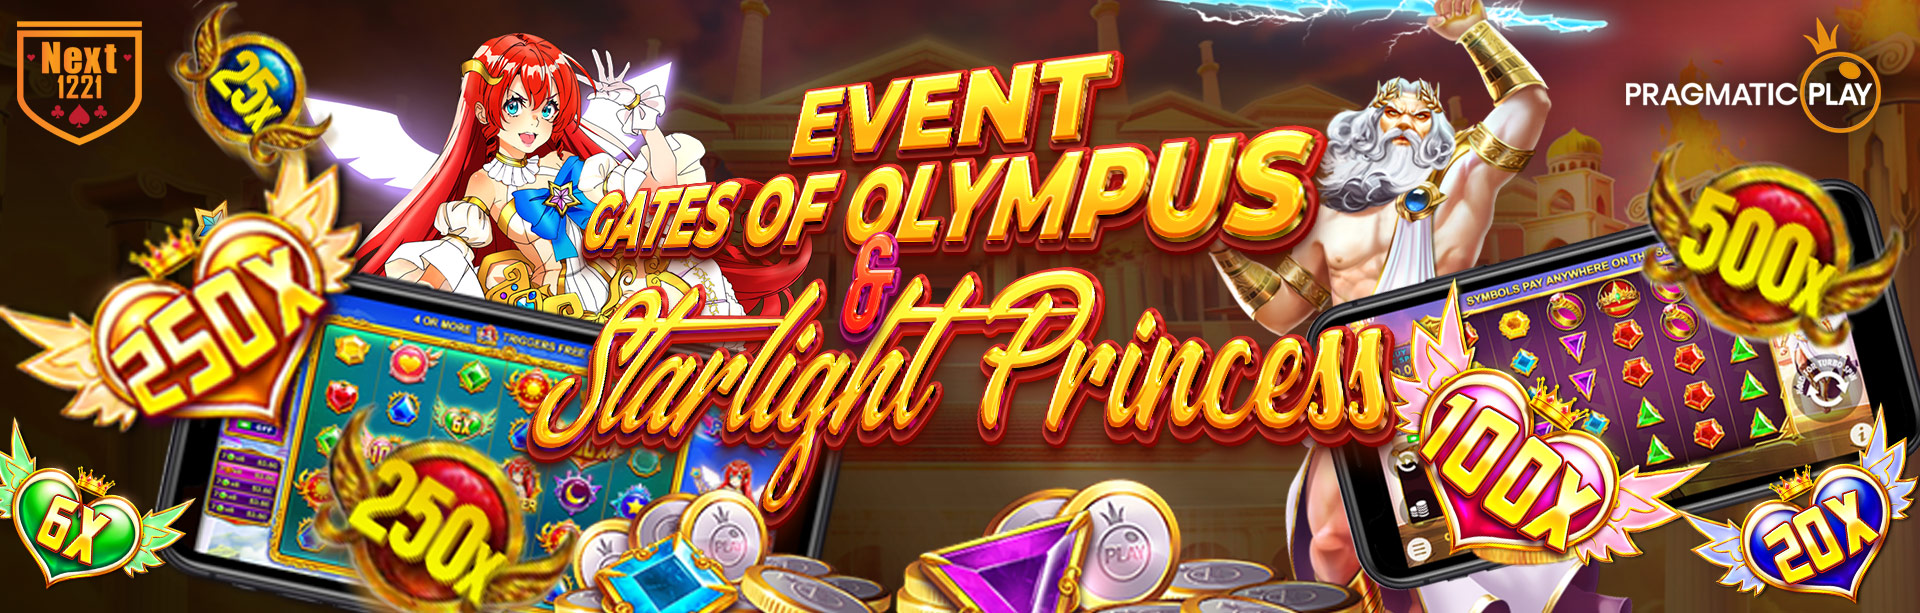 EVENT GATE OF OLYMPUS & STARLIGHT PRINCESS